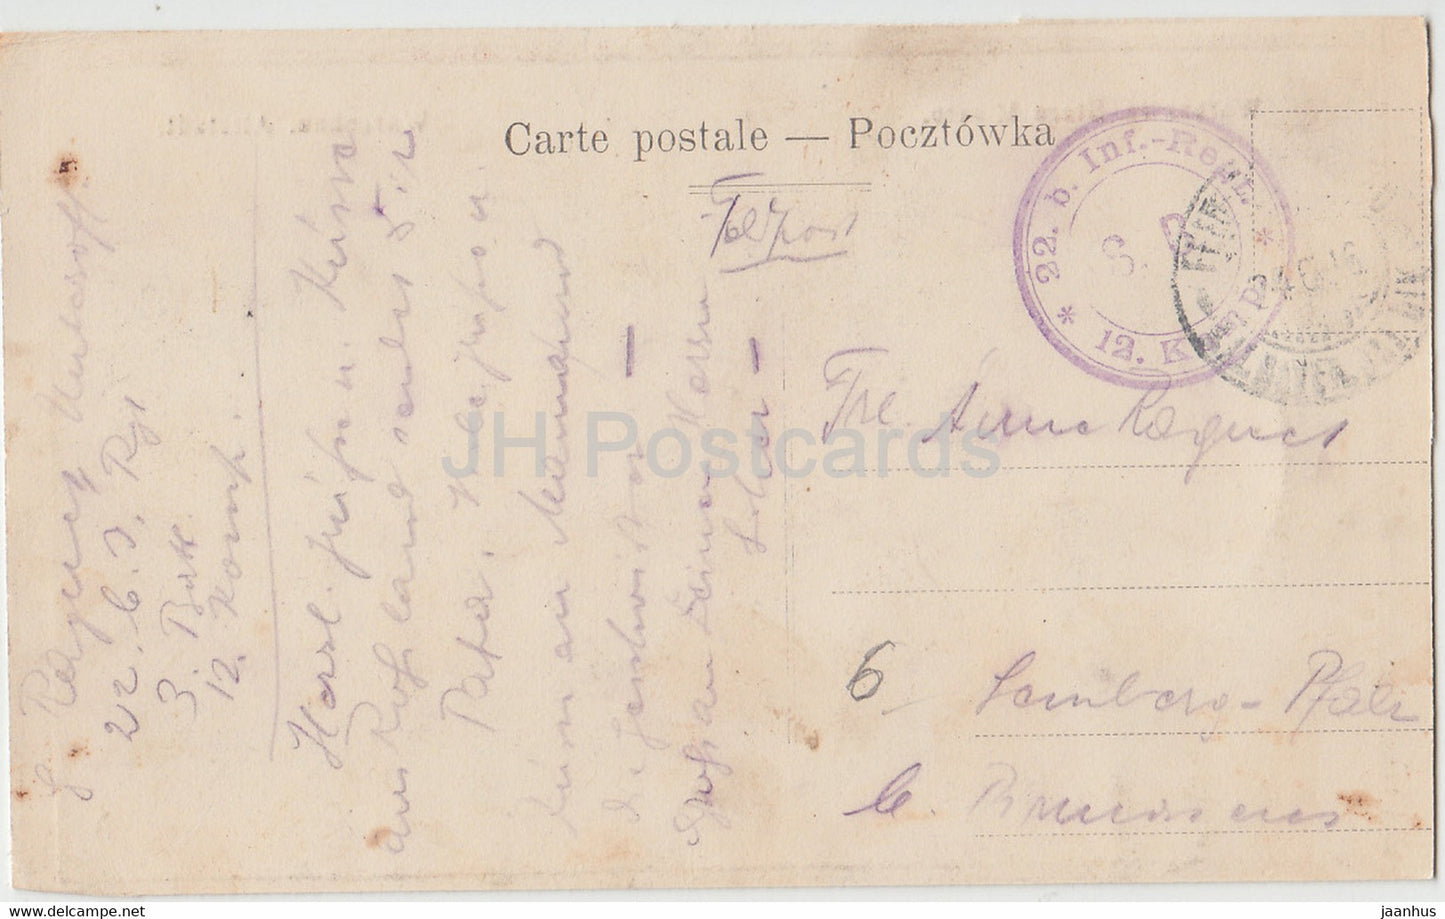 Warszawa - Stare Miasto - Warschau Altstadt - Feldpost - carte postale ancienne - 1916 - Pologne - utilisé